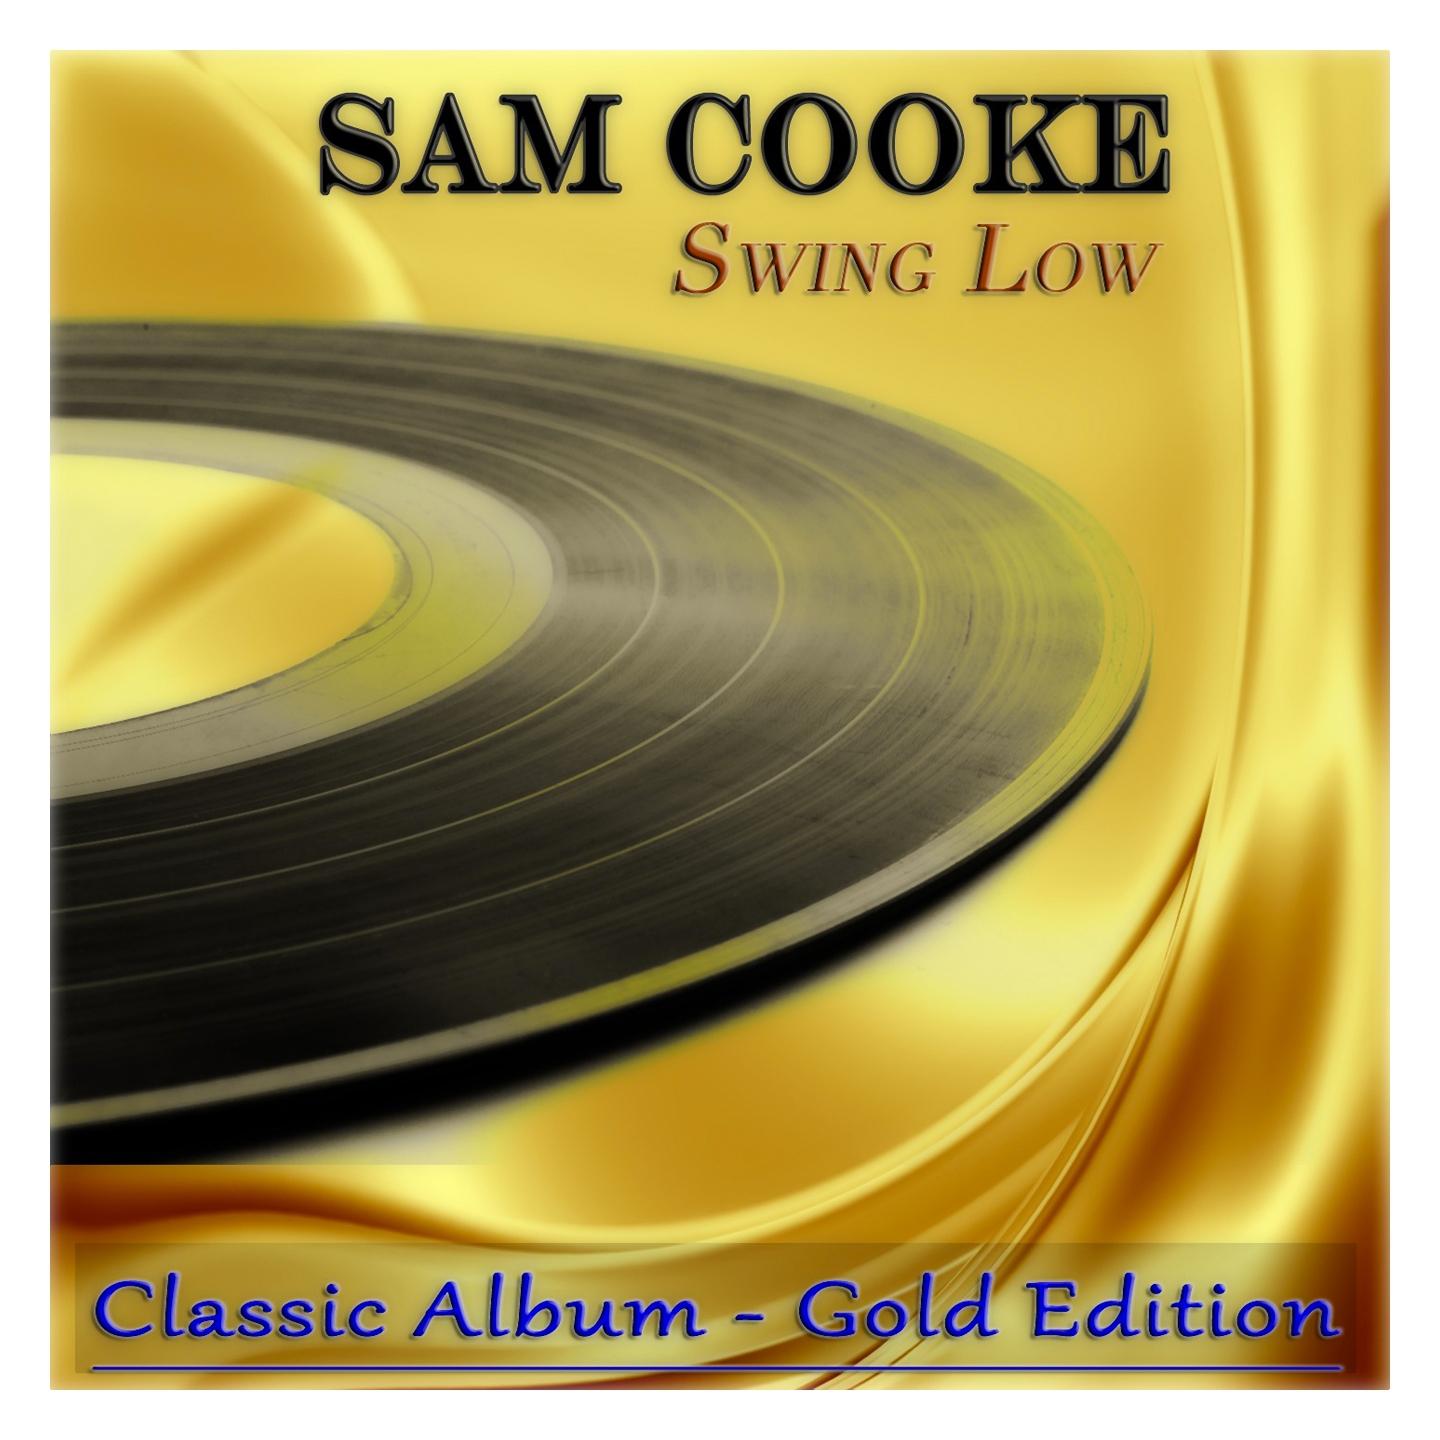 Sam Cooke: Swing Low专辑